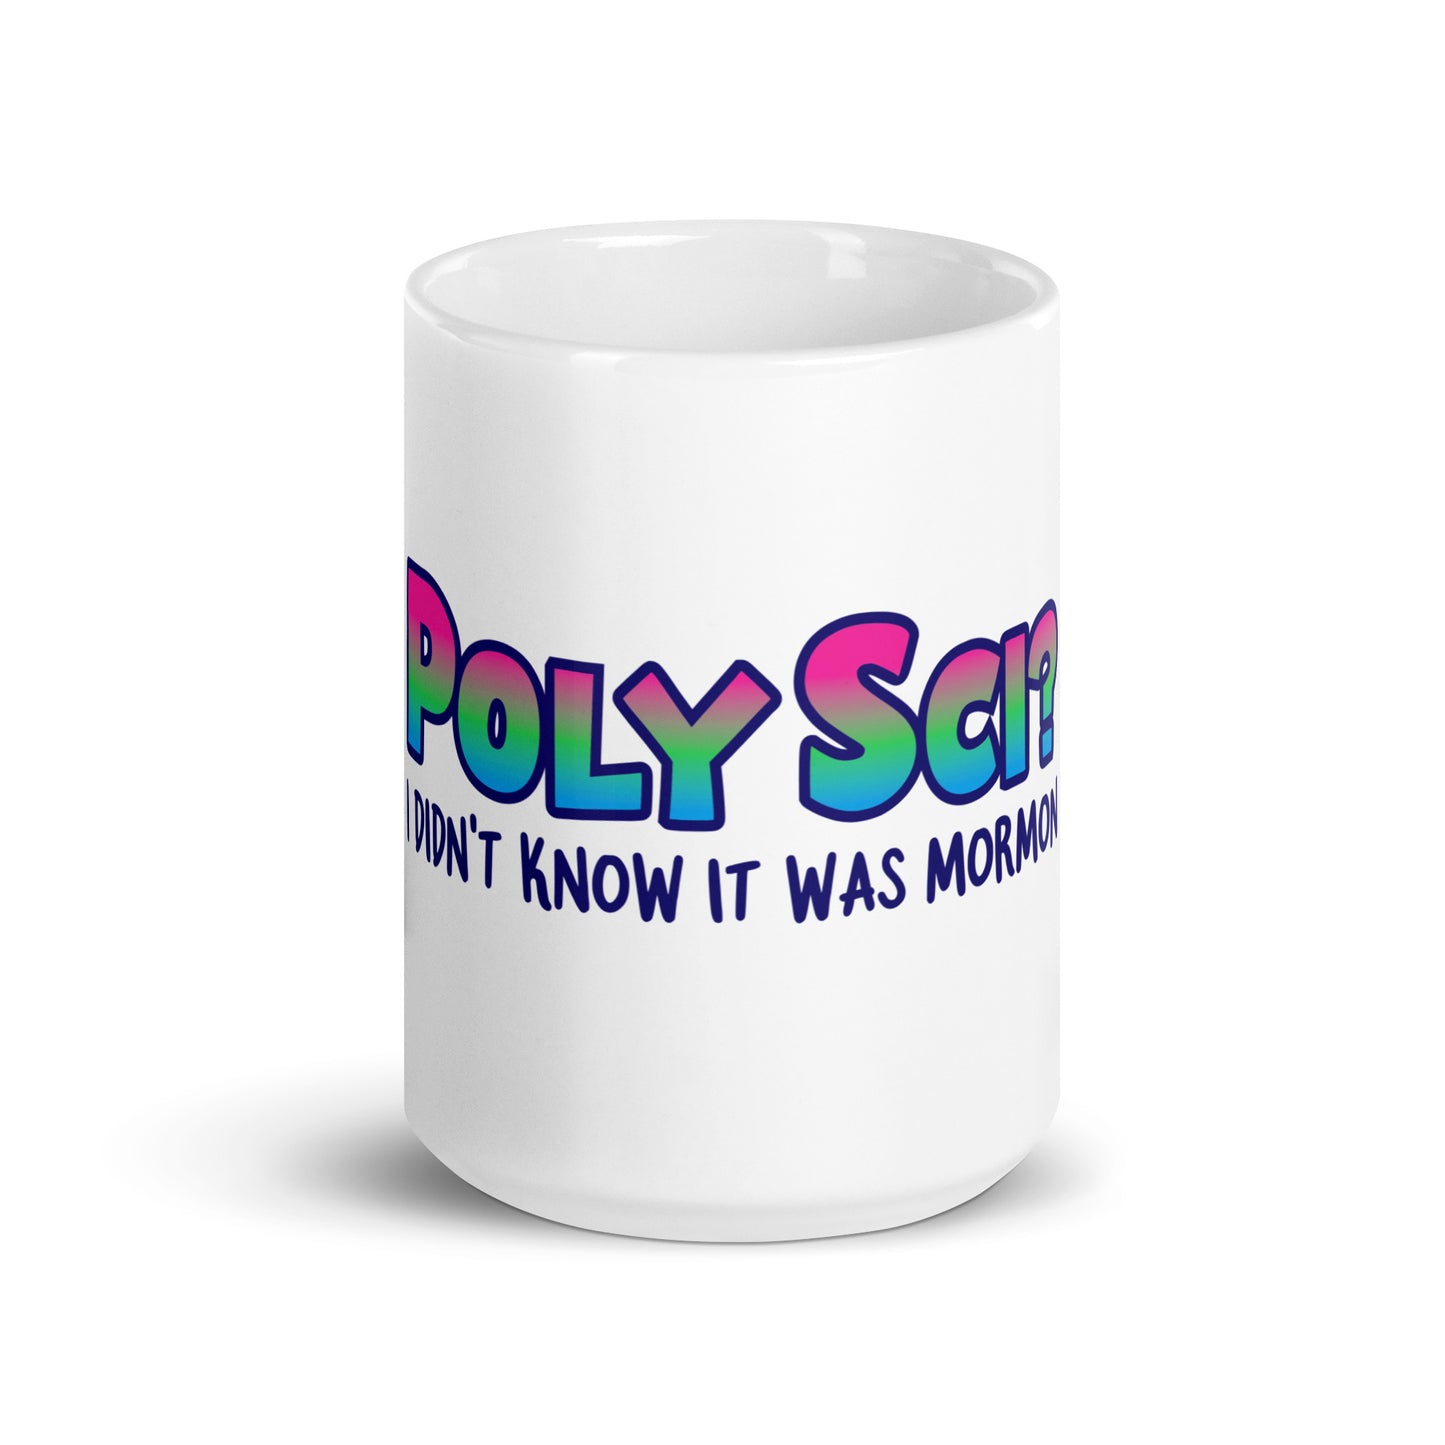 PolySci? I Didn't Know It Was Mormon mug